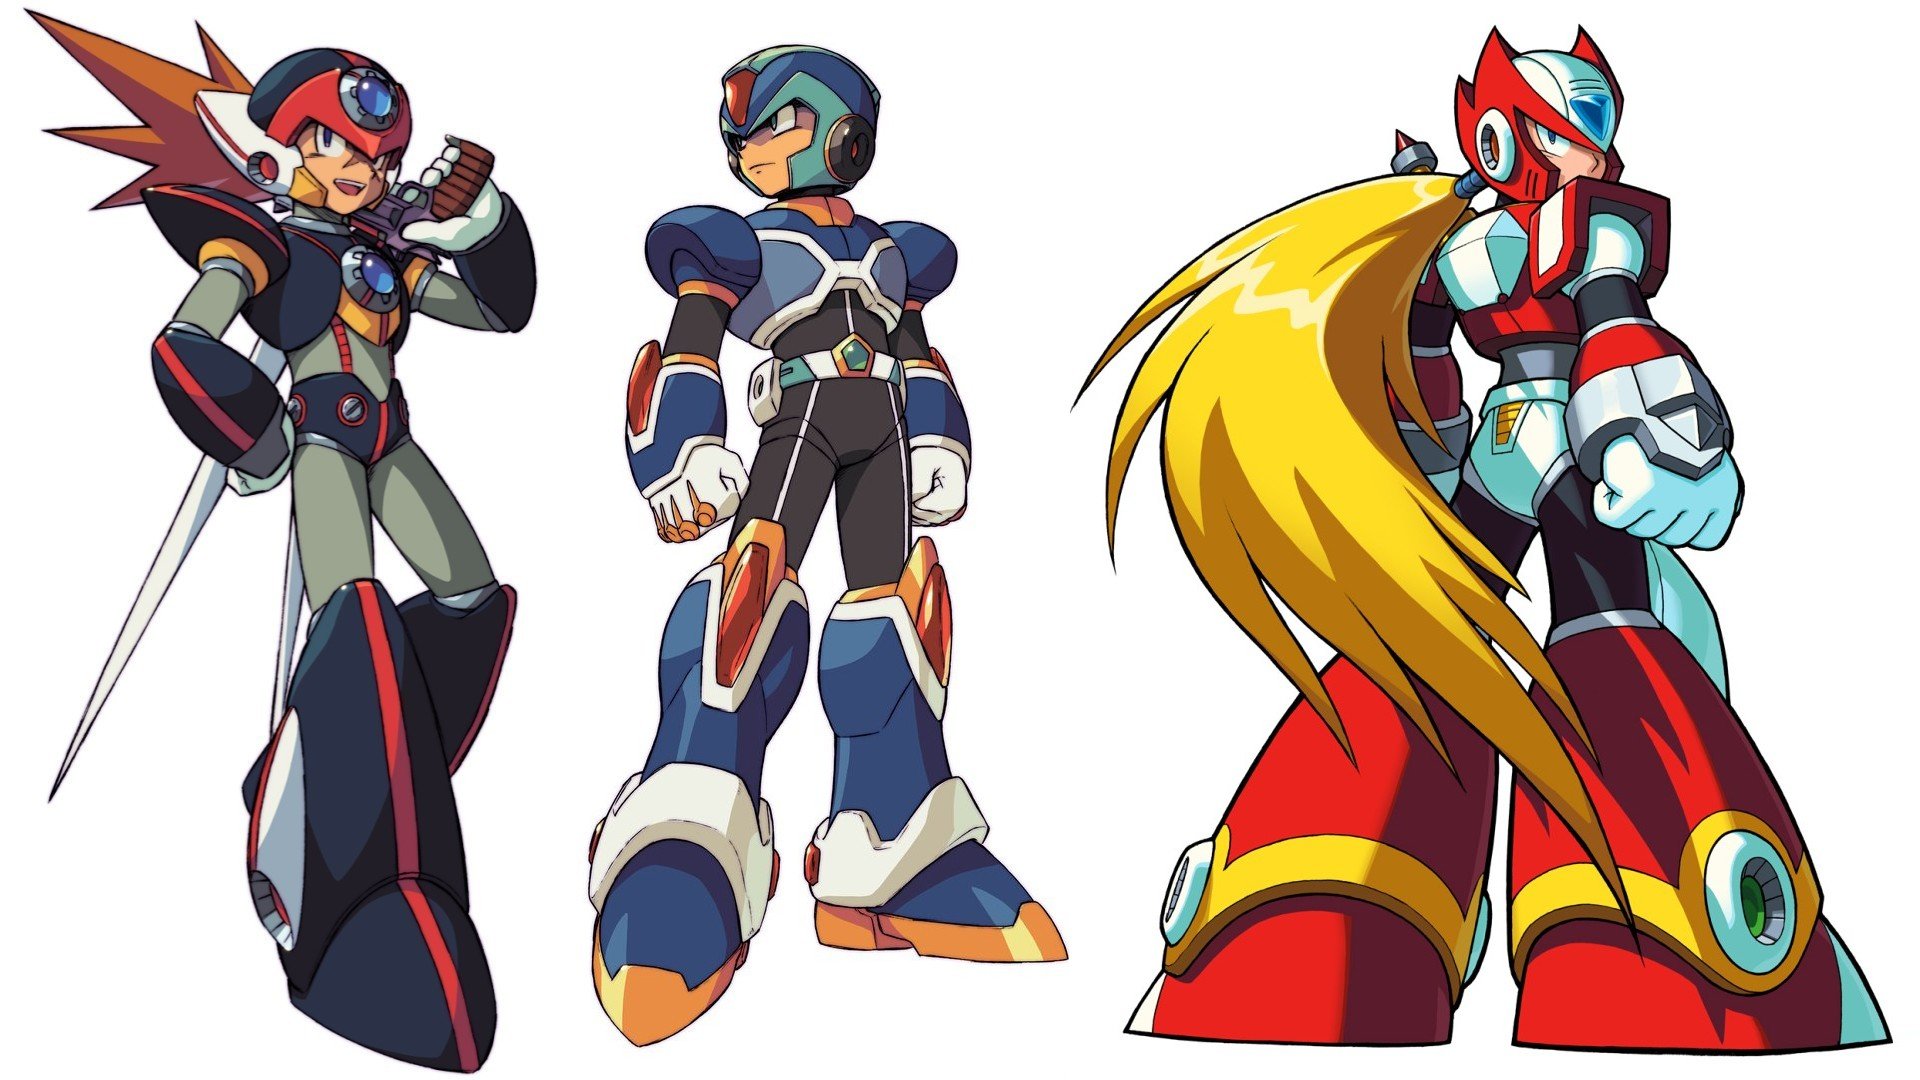 Mega Man X Wallpapers Hd For Desktop Backgrounds Looking for the best megam...